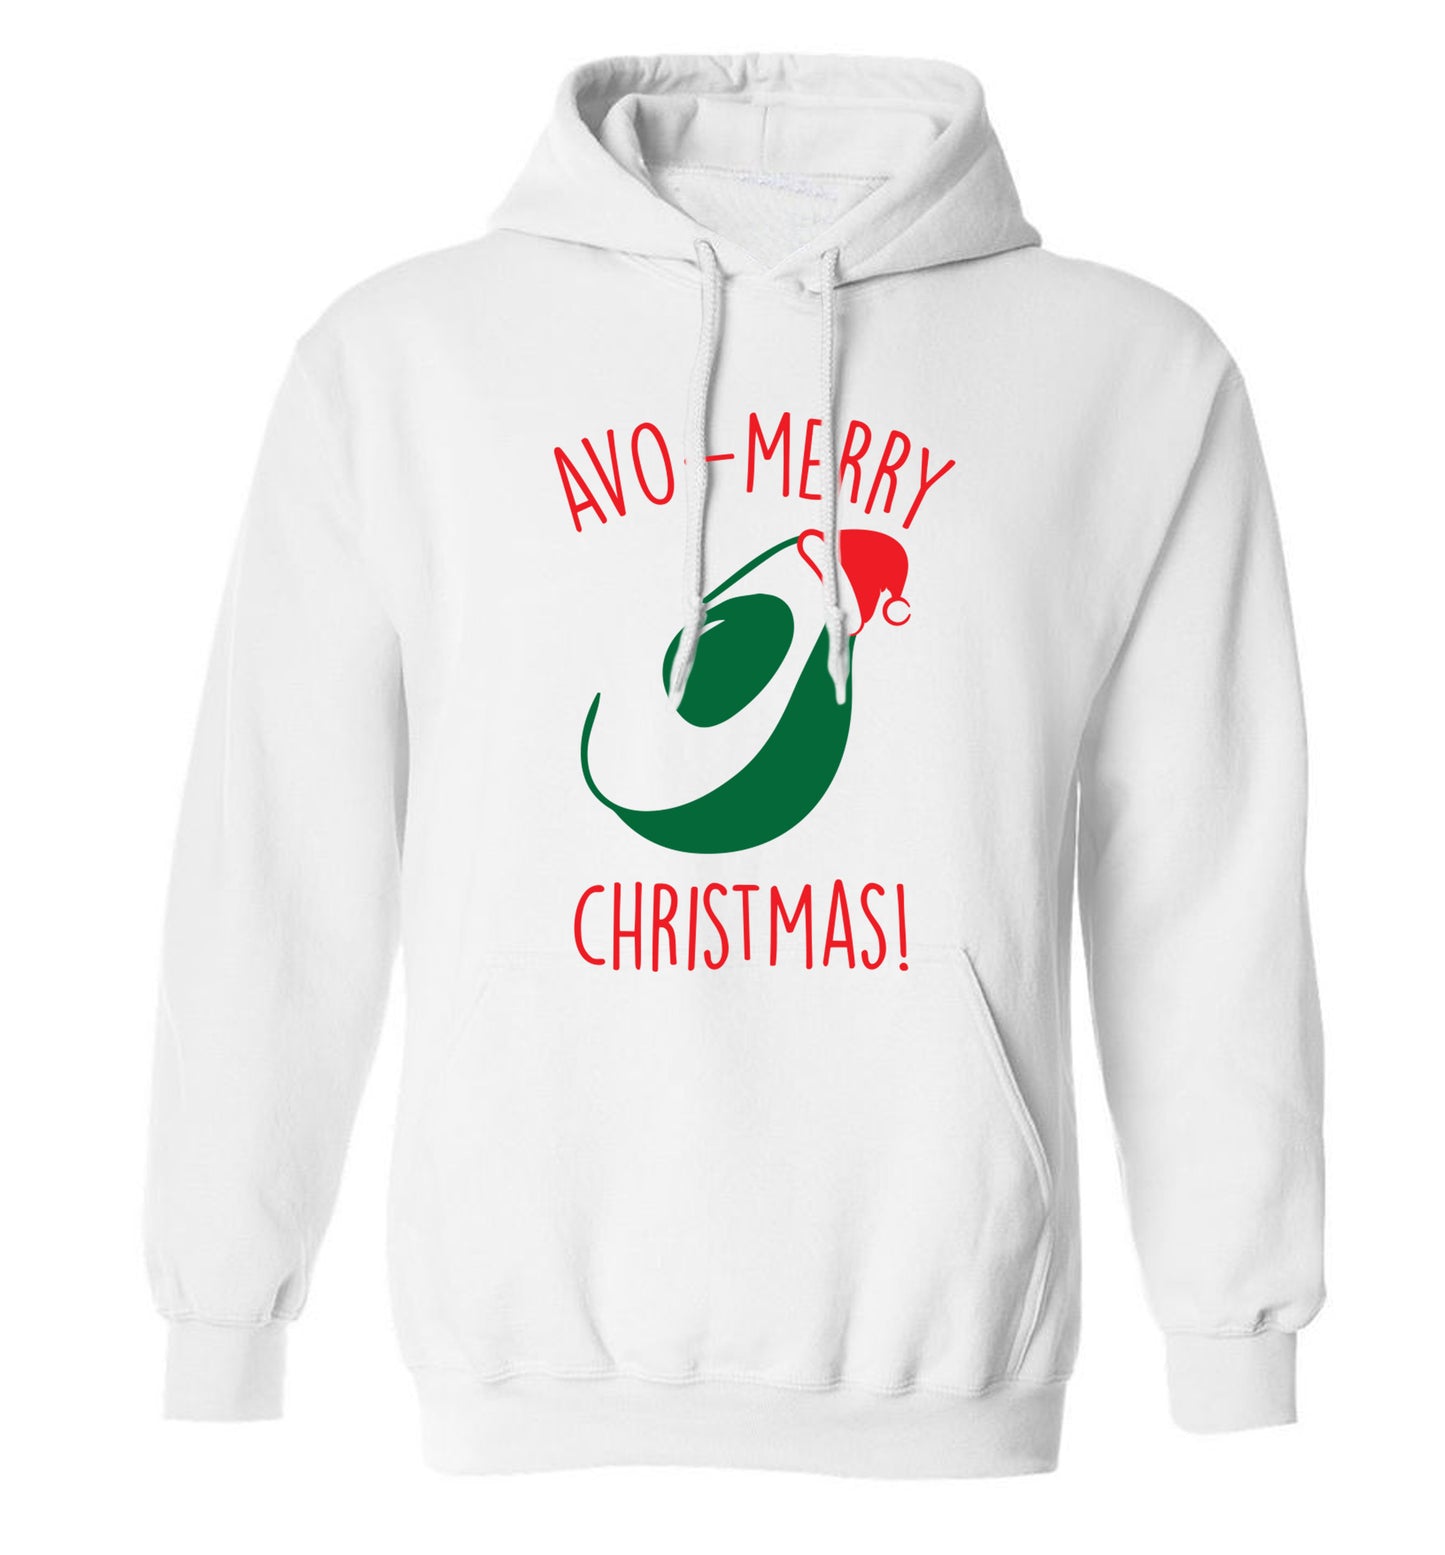 Avo-Merry Christmas adults unisex white hoodie 2XL